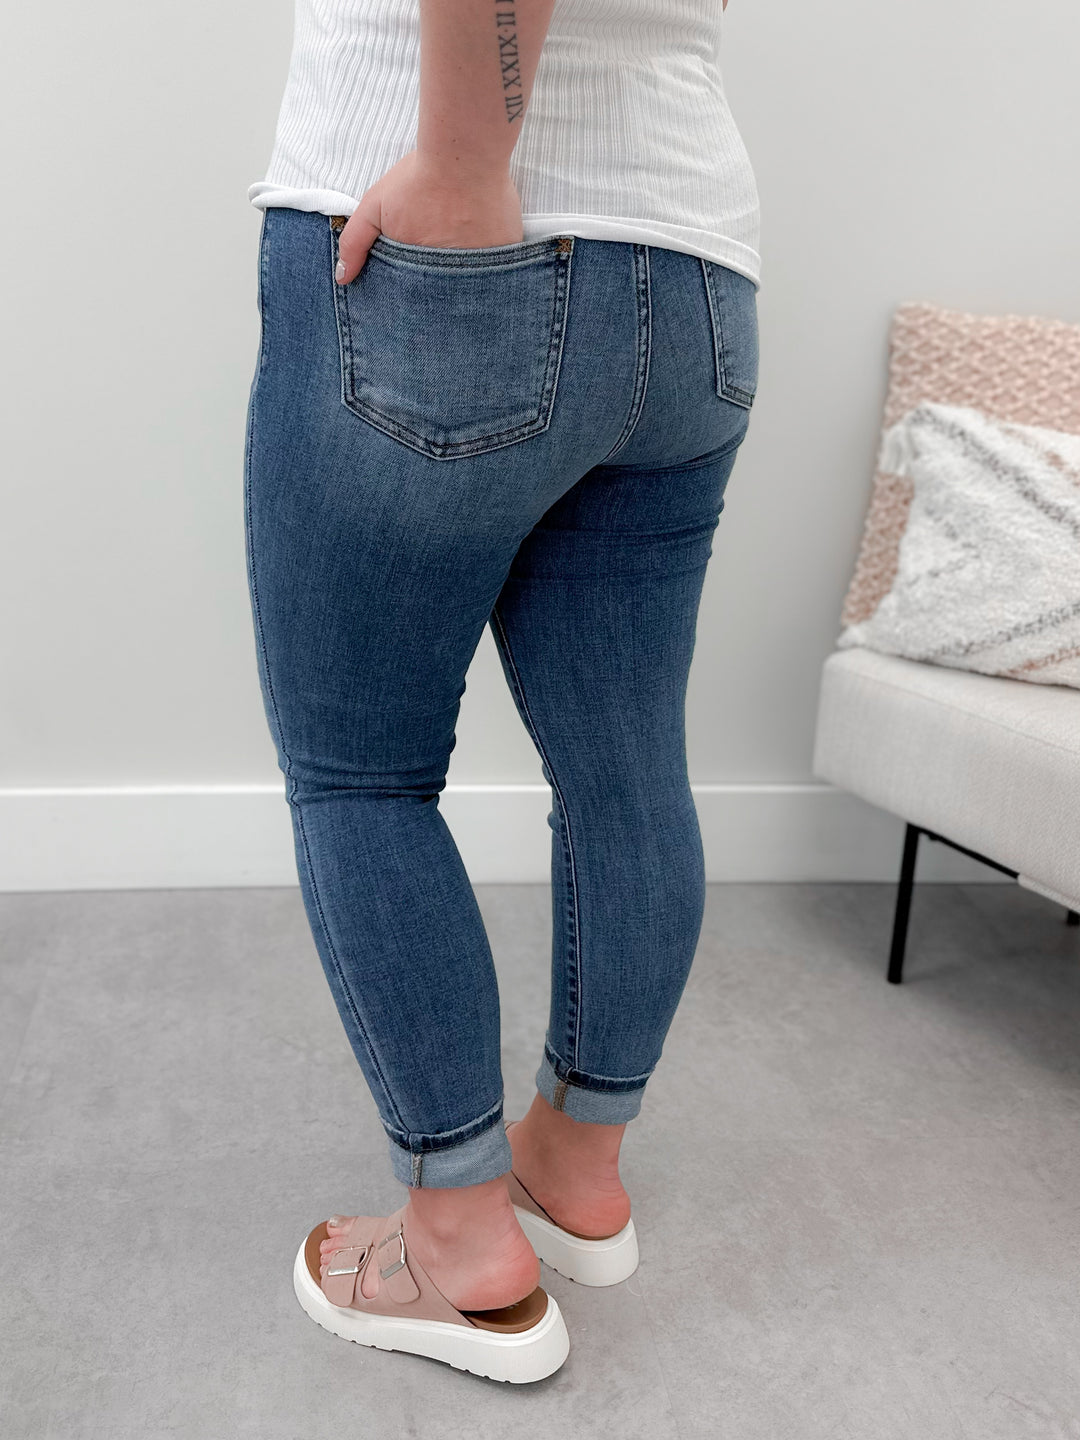 Kiara Mid Rise Jeans by Judy Blue